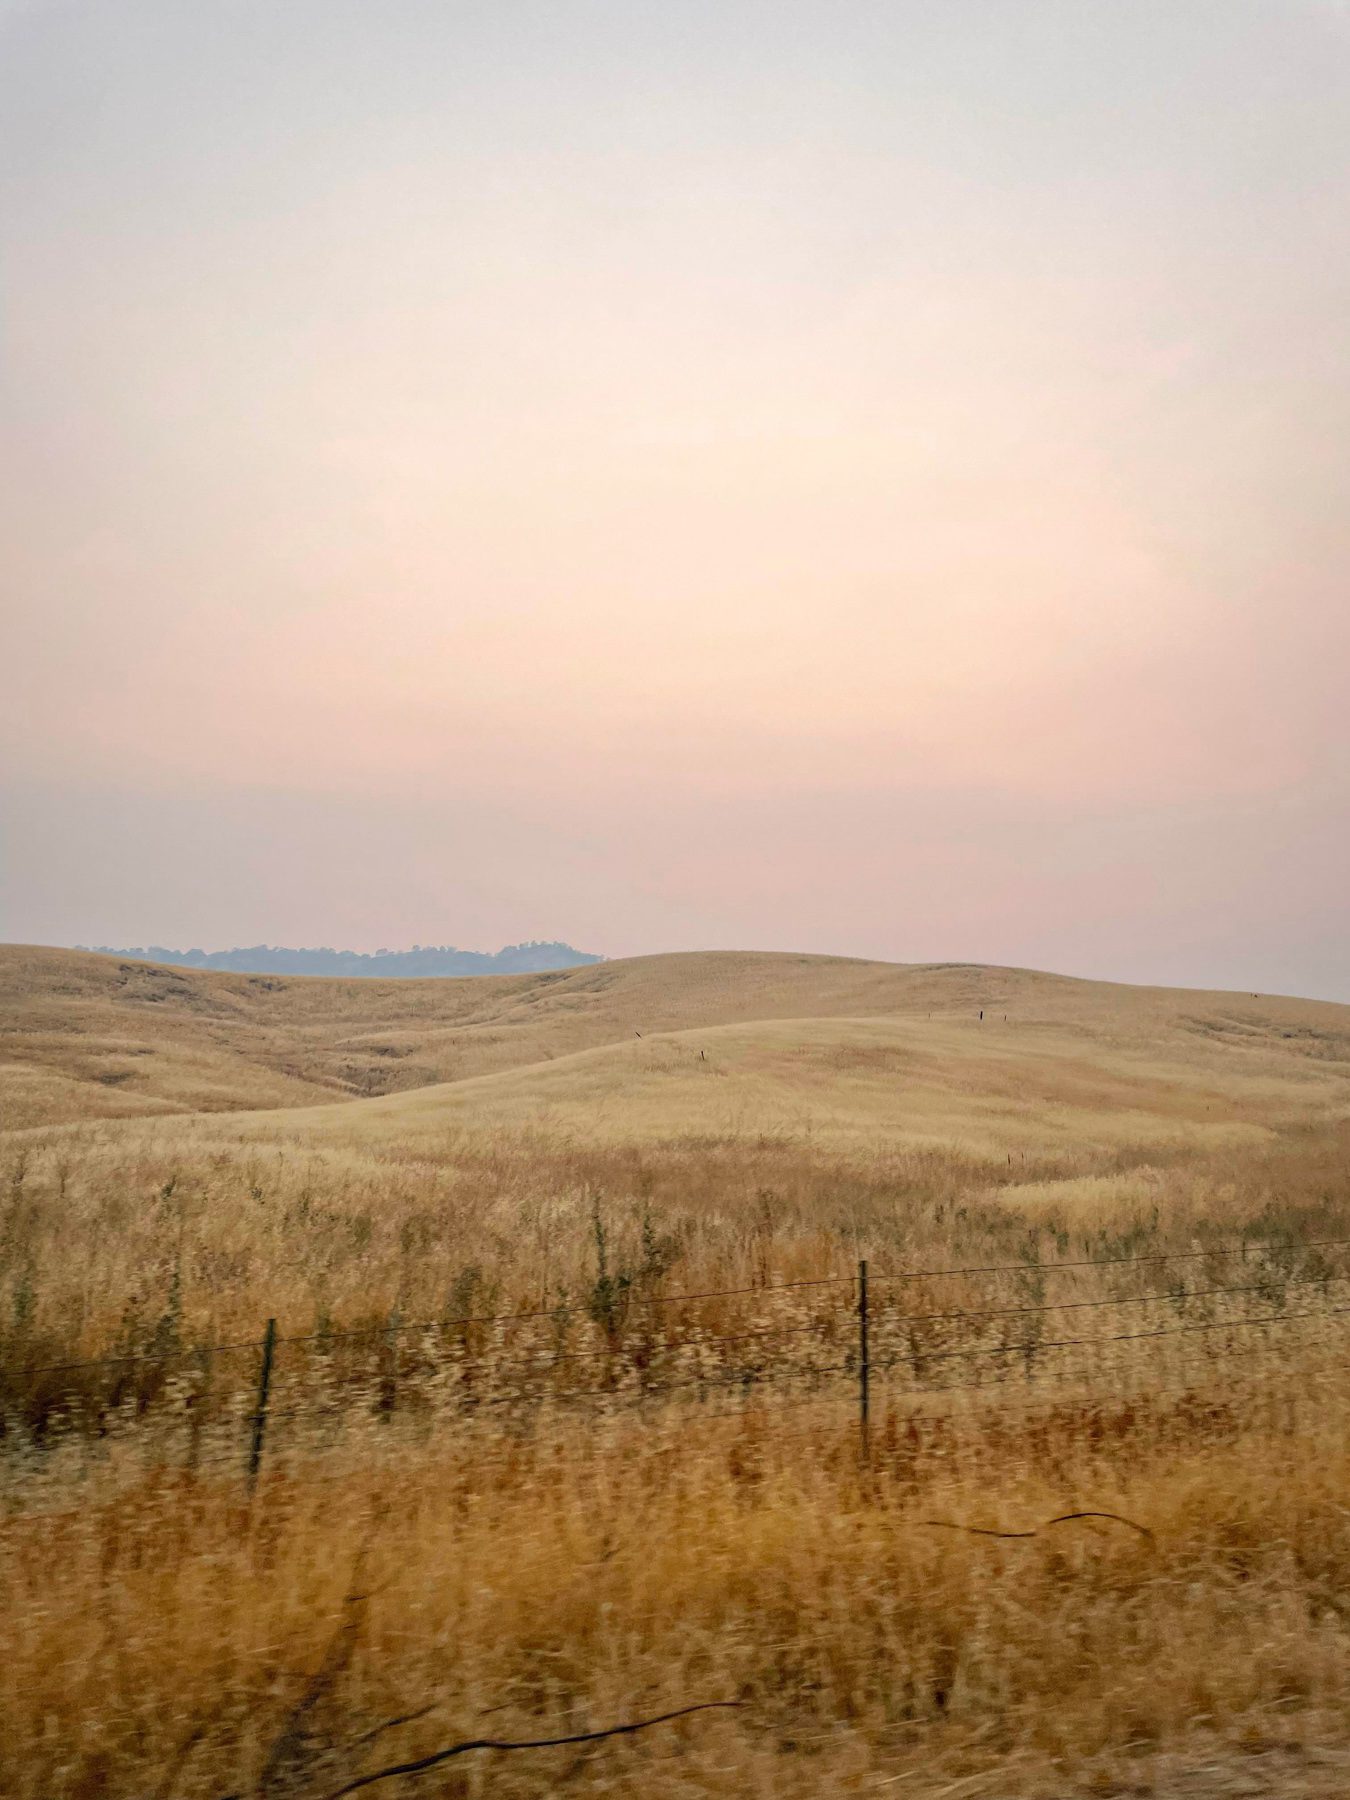 Fields of prairie grass during sunset